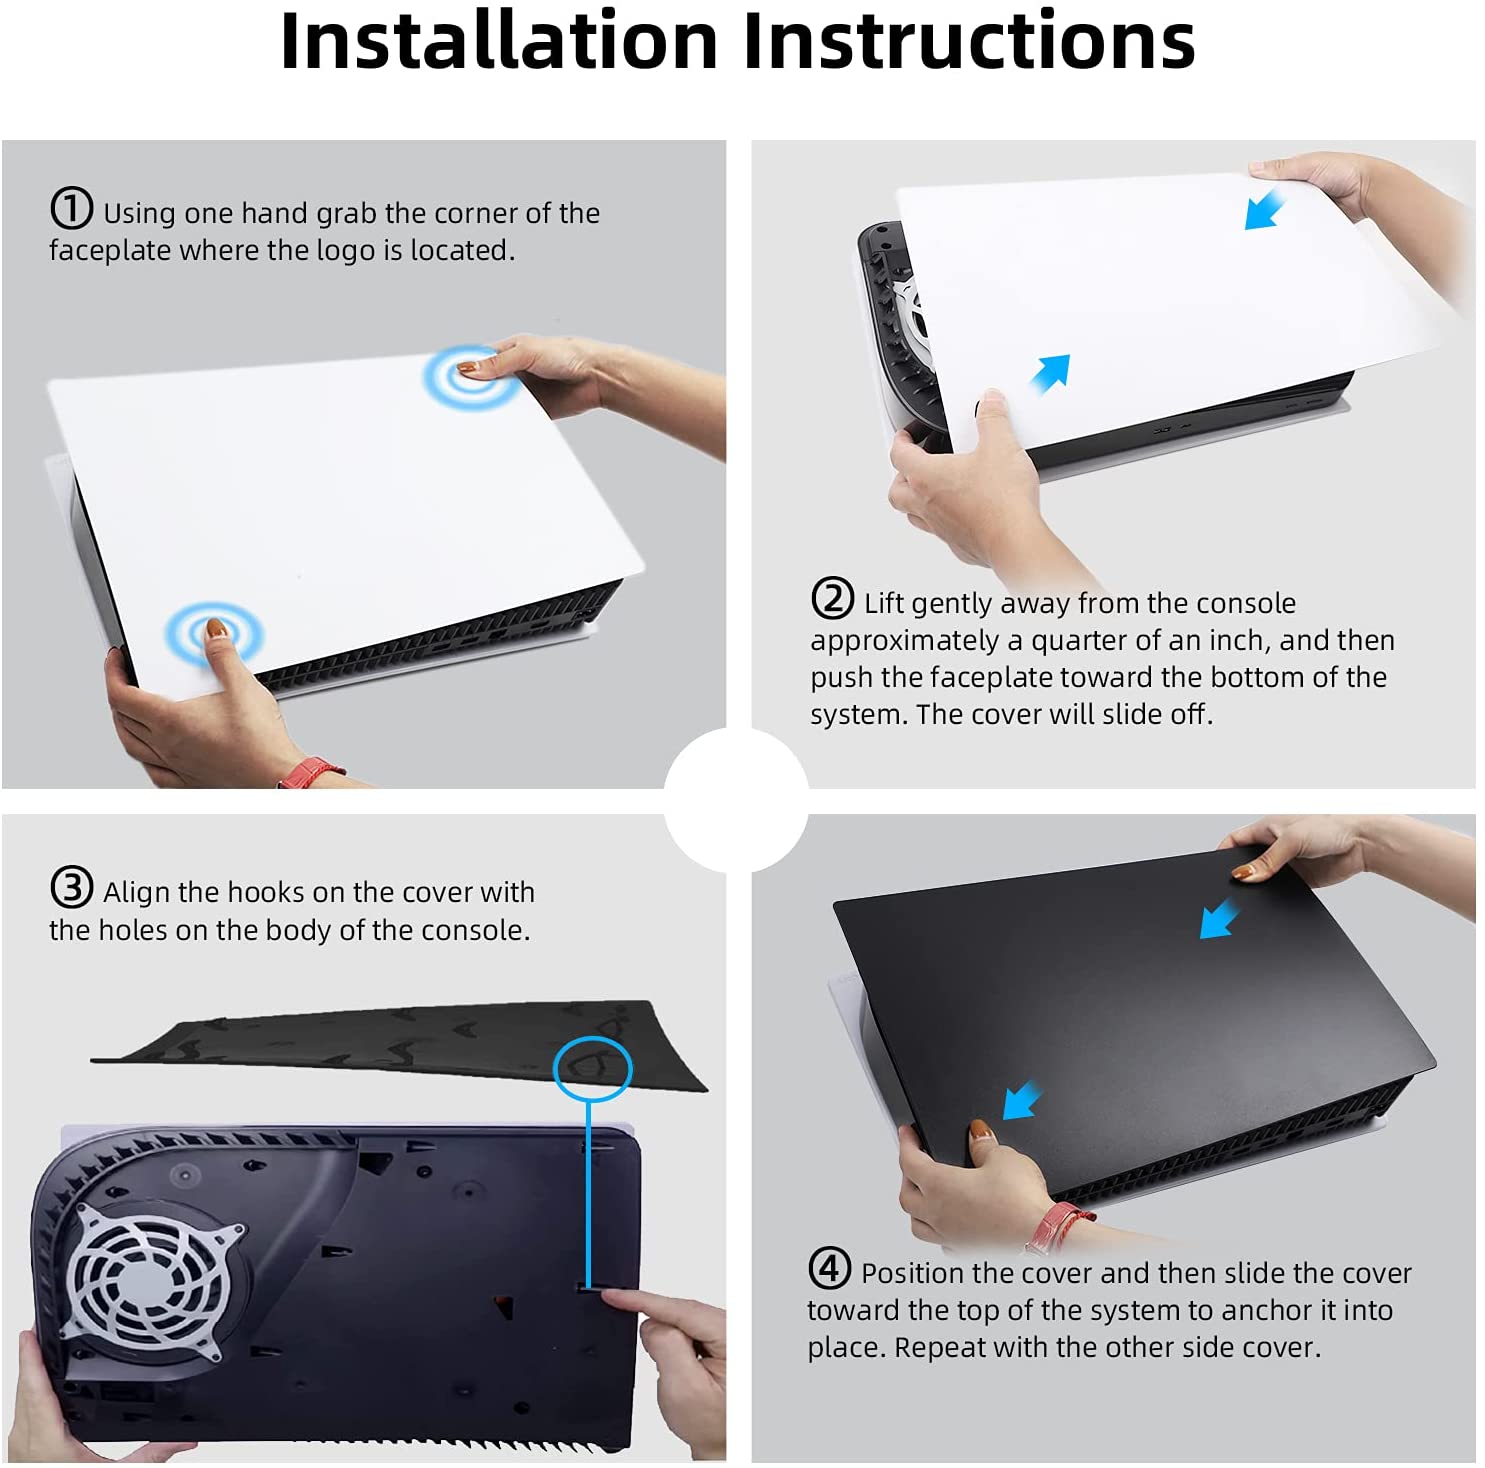 PS5 Accessories Faceplate installation: Remove original cover, attach black cover securely